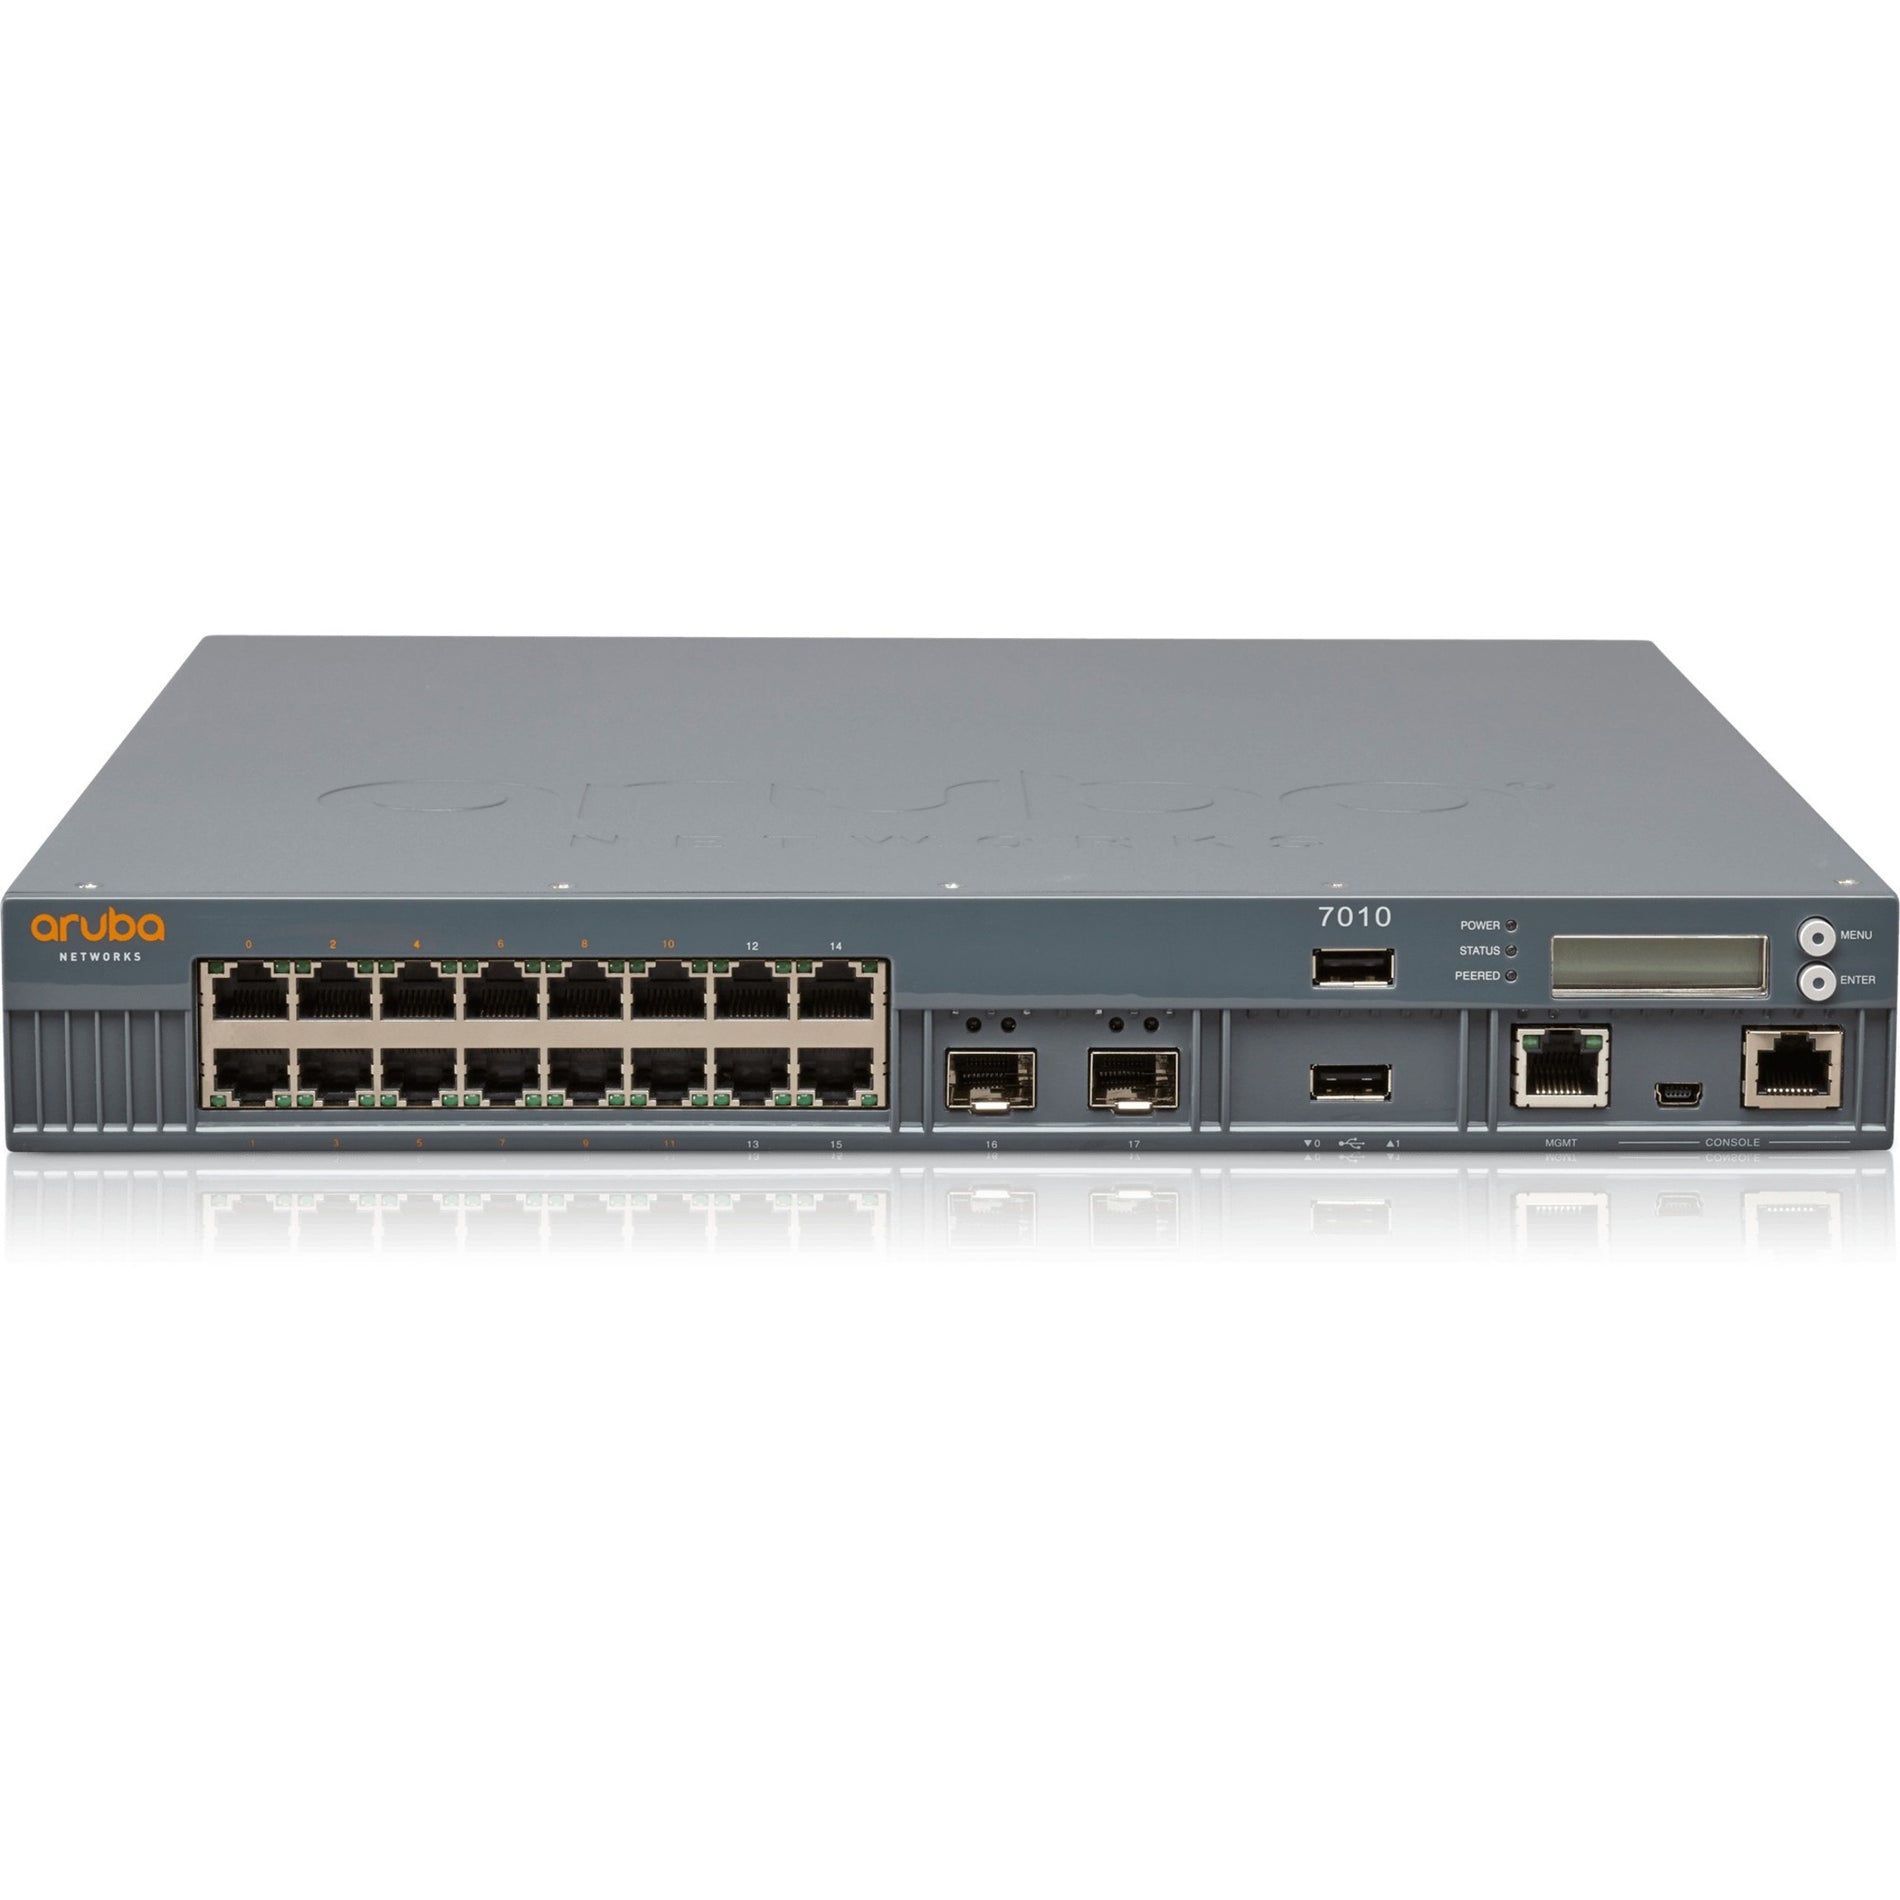 Aruba JW679A 7010 Wireless LAN Controller, Gigabit Ethernet, 16 Network Ports